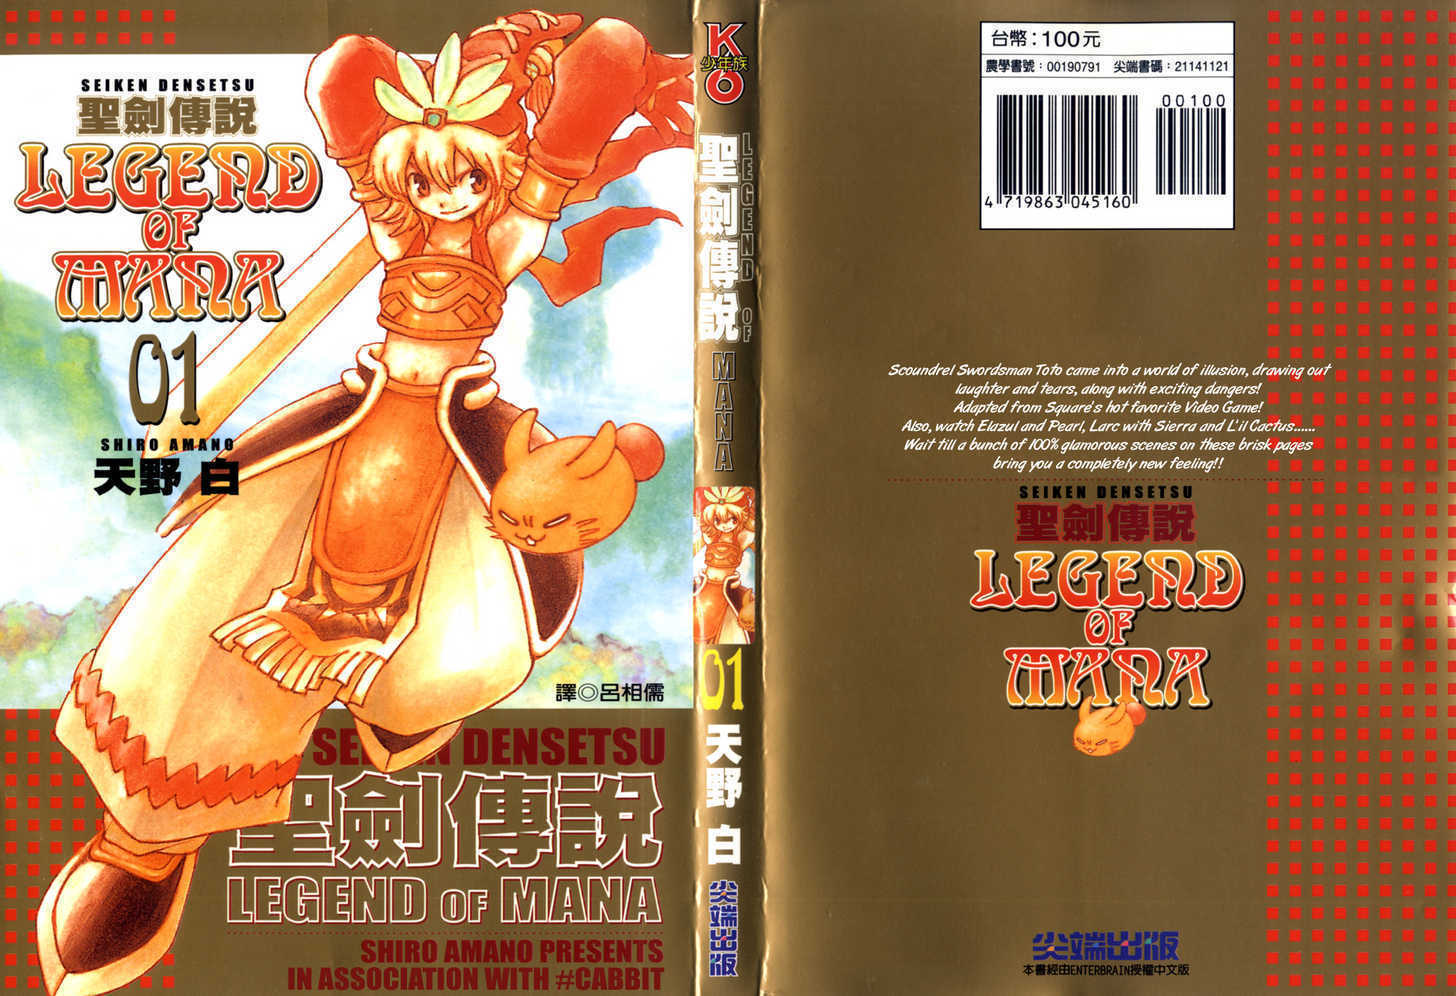 Seiken Densetsu: Legend of Mana 1